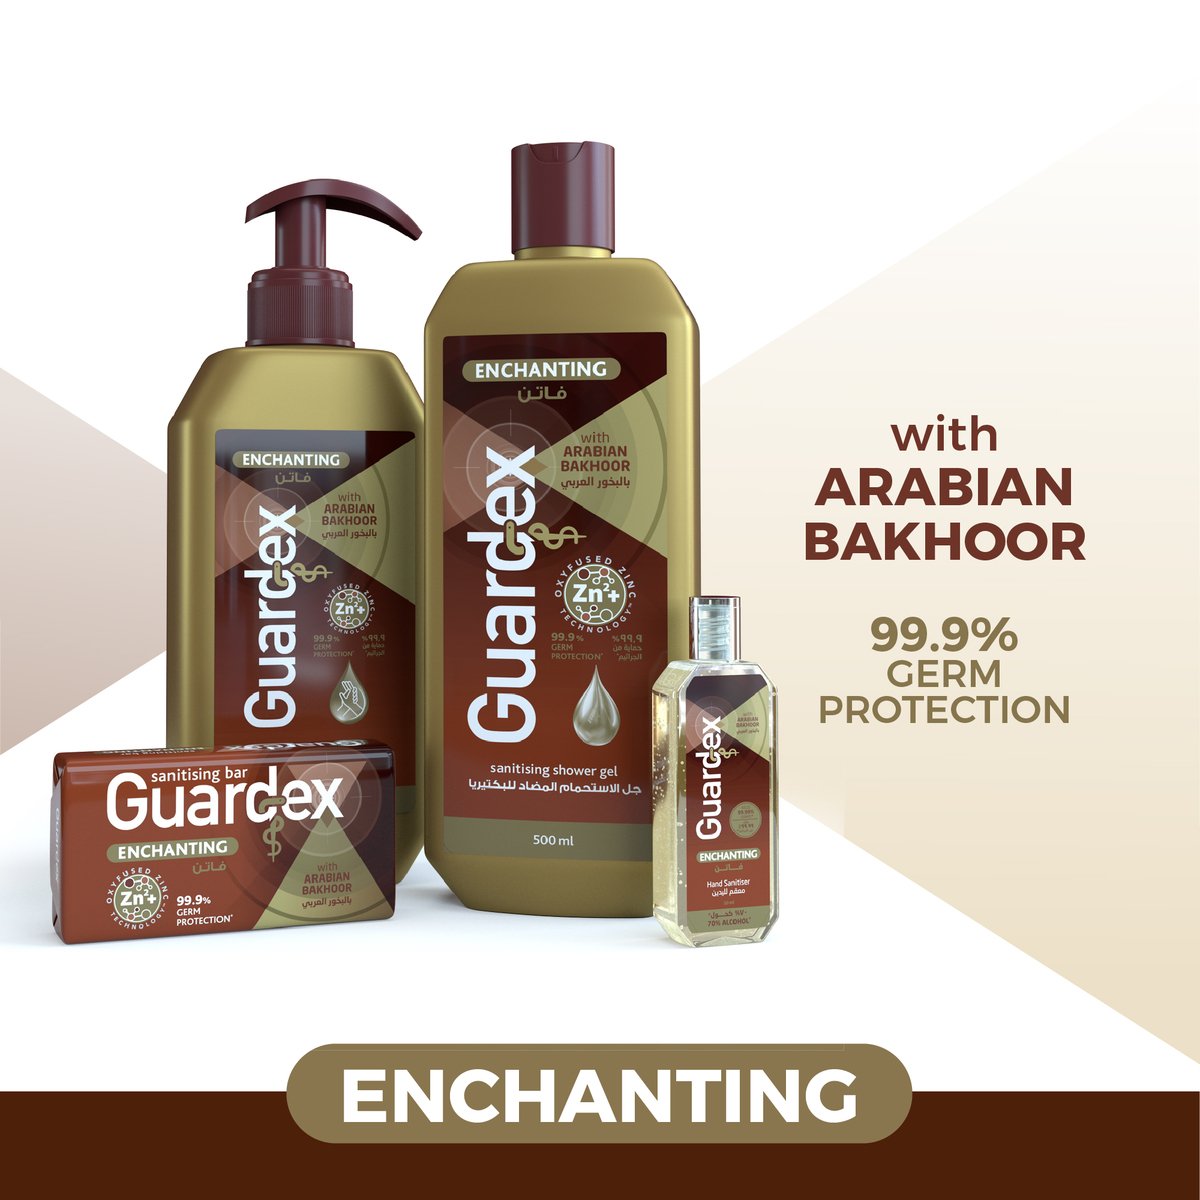 Guardex Sanitising Bar Soap Enchanting 120 g